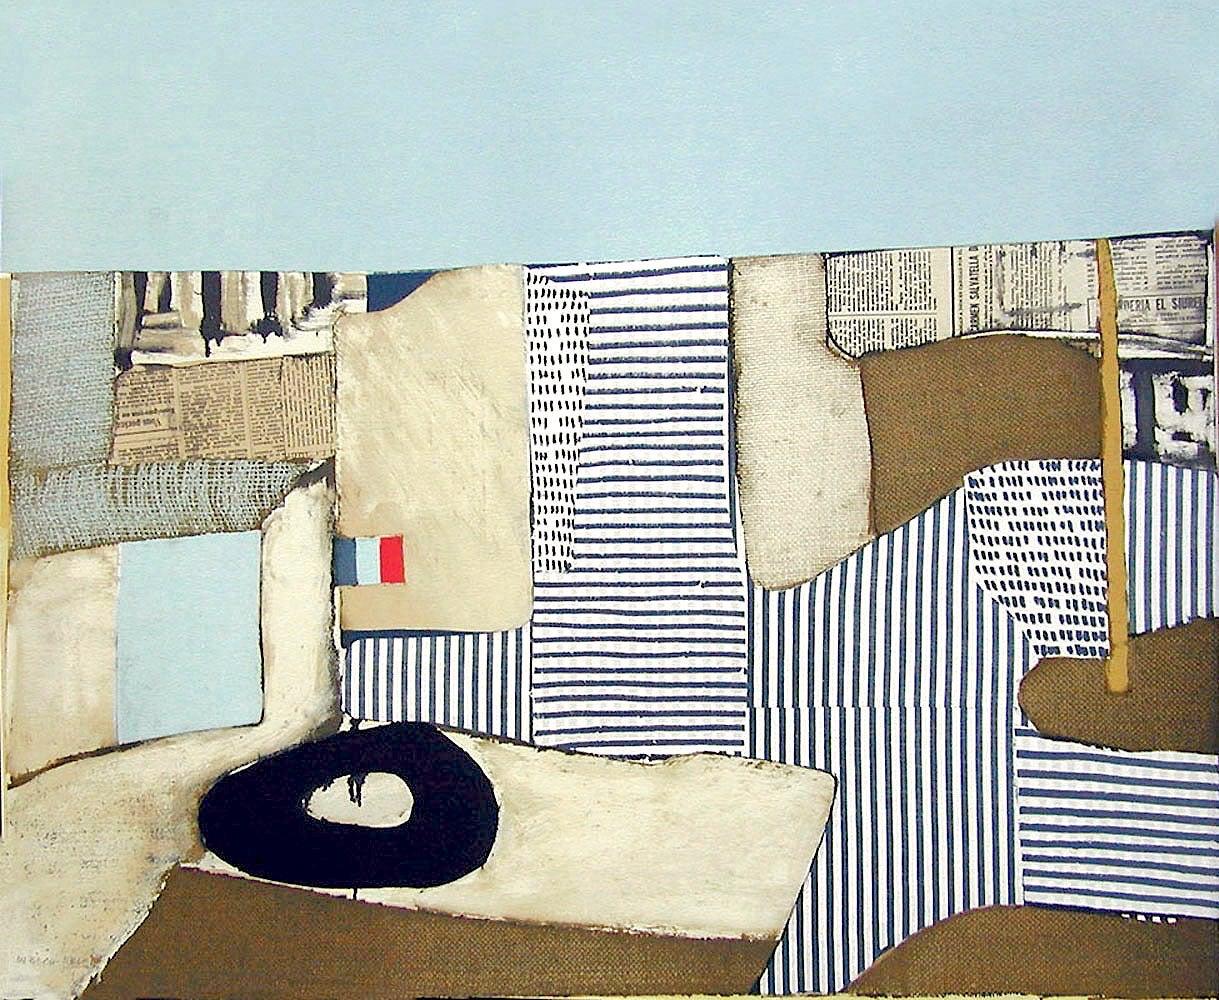 VILLA NEUVE Signed Lithograph, Modernist Abstract, City Landscape, Collage, Flag For Sale 2